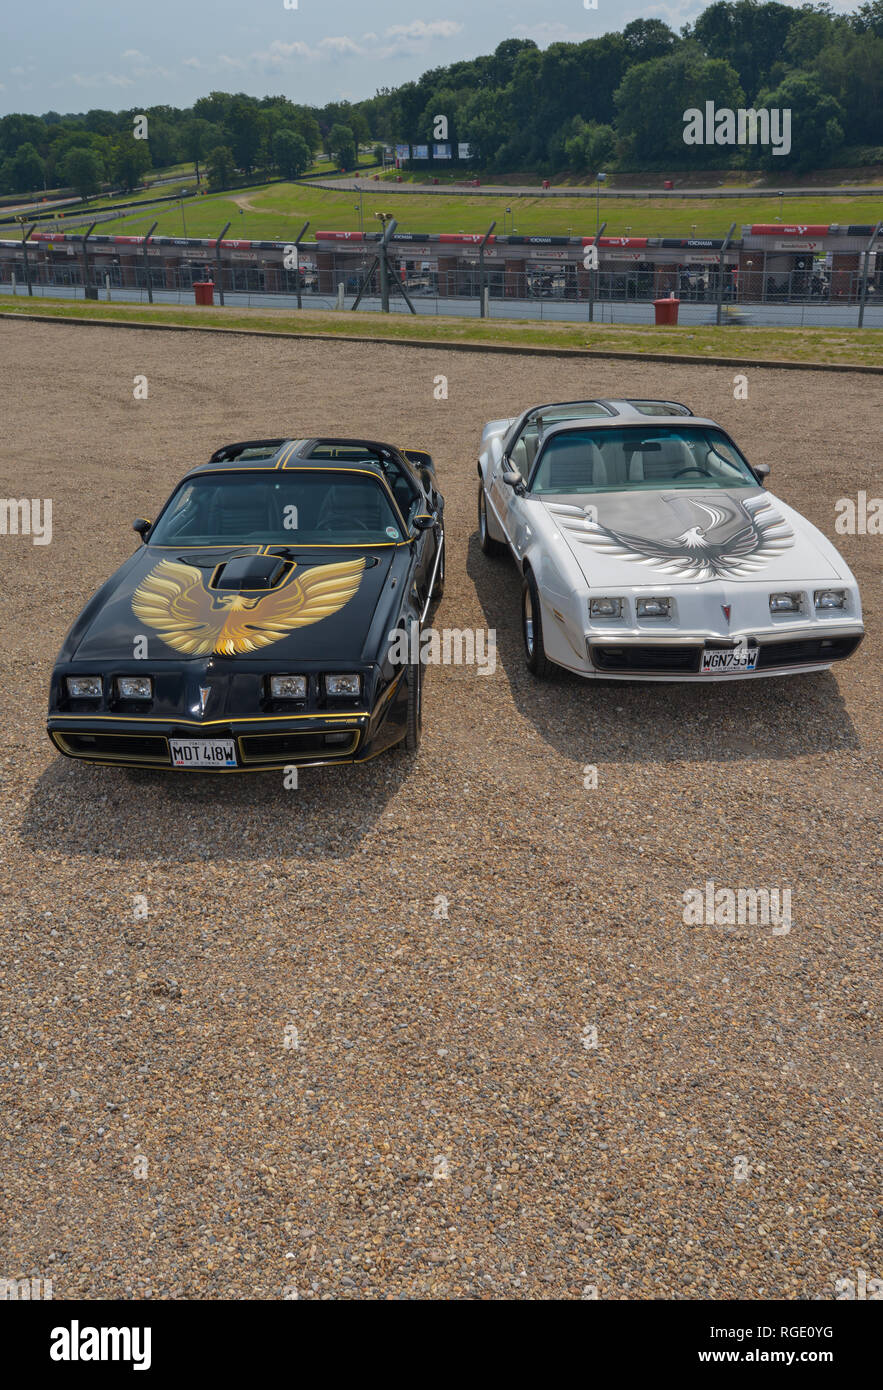 Black 1980 Pontiac Trans Am and white 1981 Trans Am Turbo - classic American sports cars Stock Photo